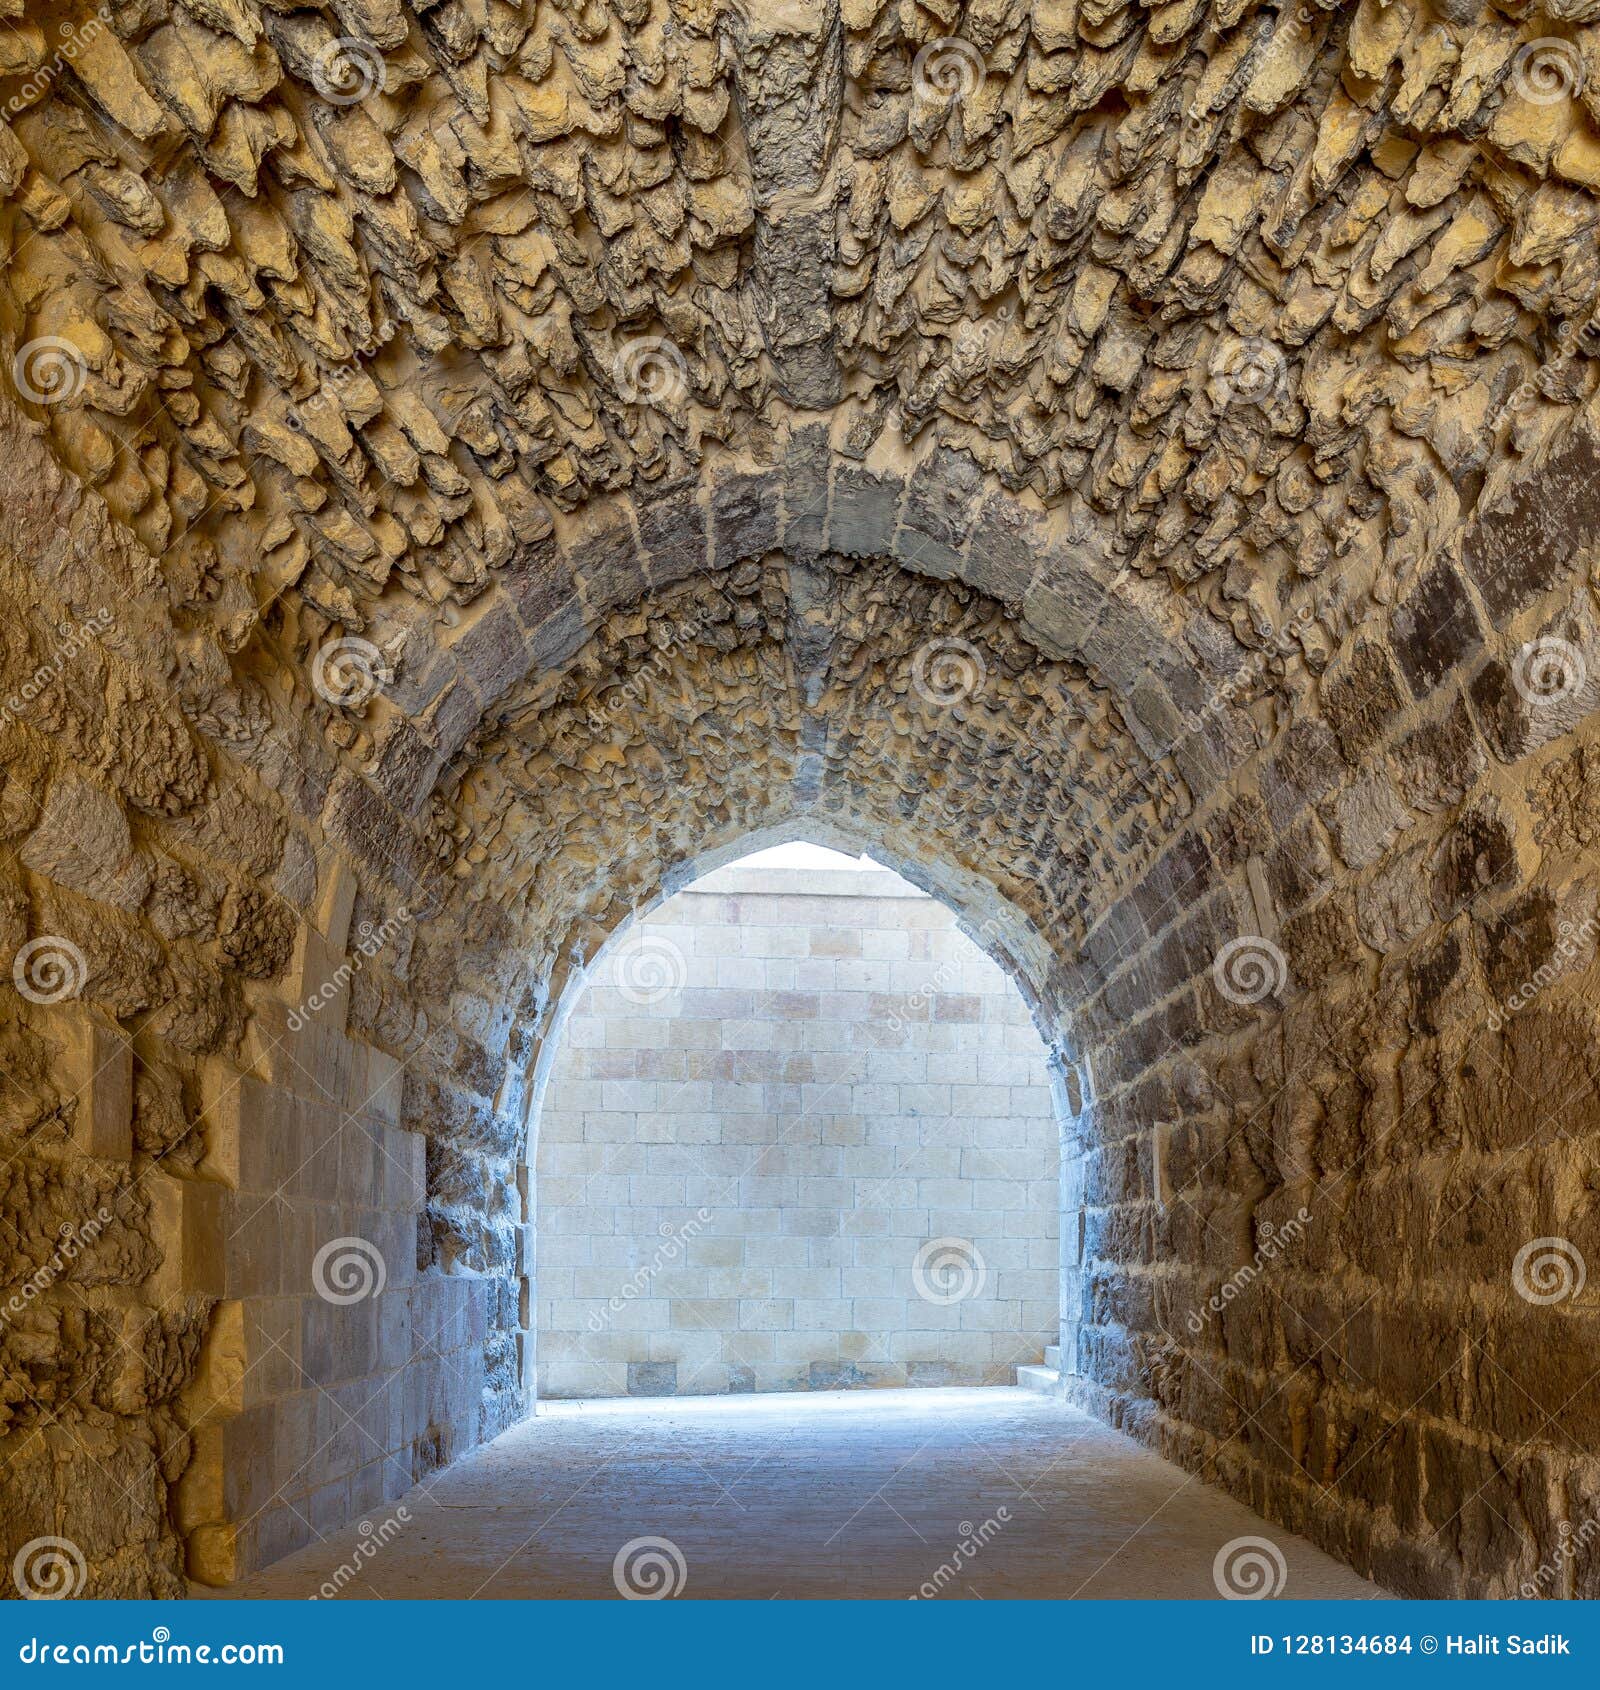 mamluk era arched stones tunnel leading to al-muayyad bimaristan ancient hospital, cairo, egypt